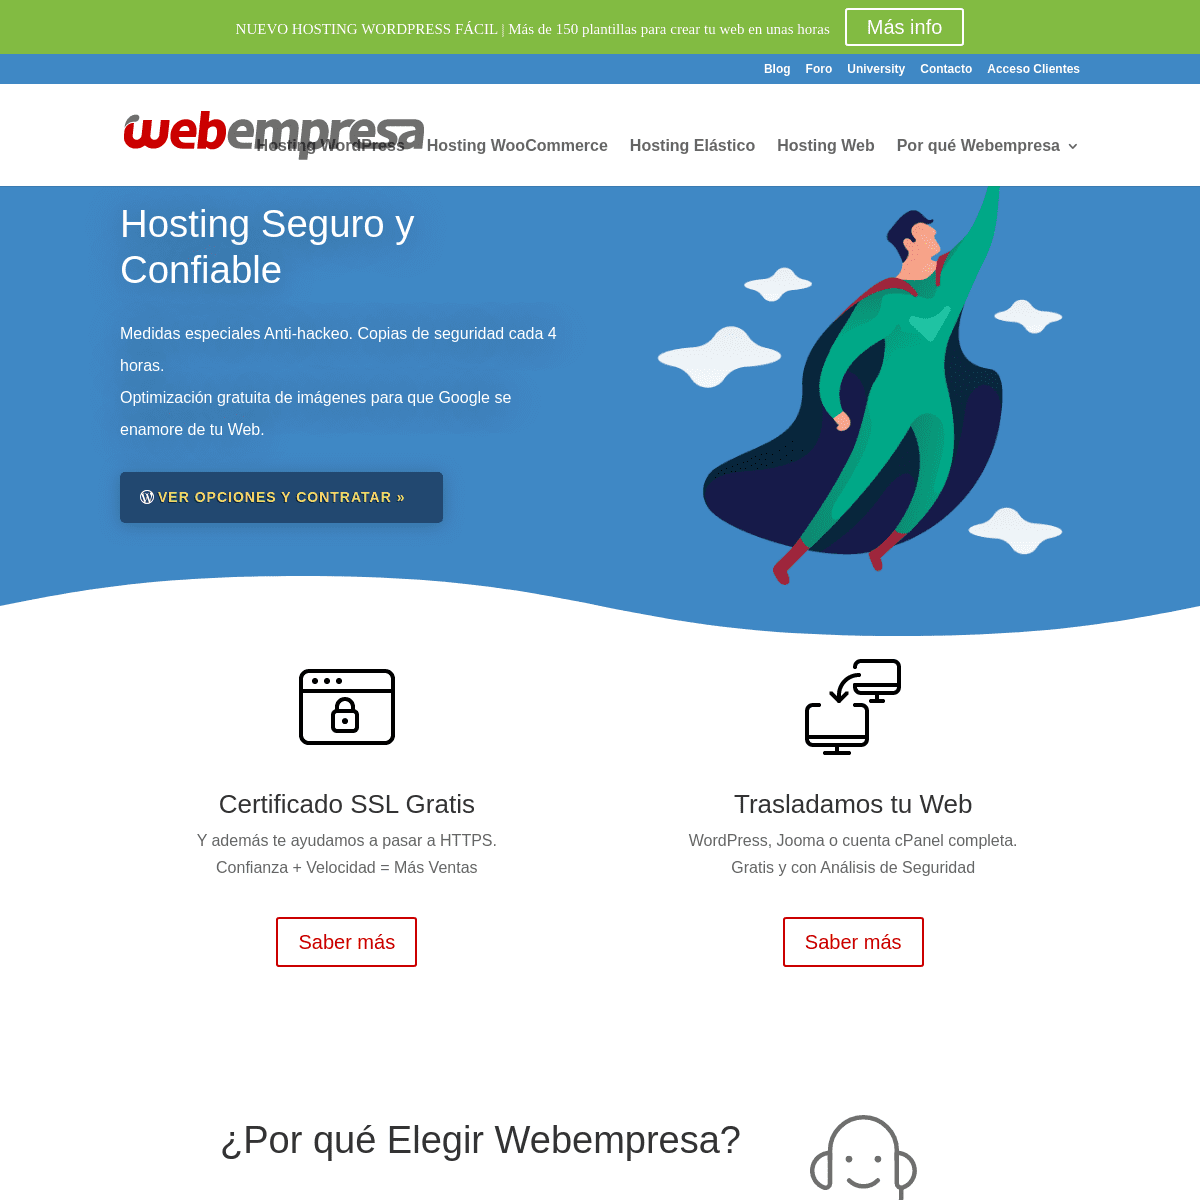 A complete backup of webempresa.com